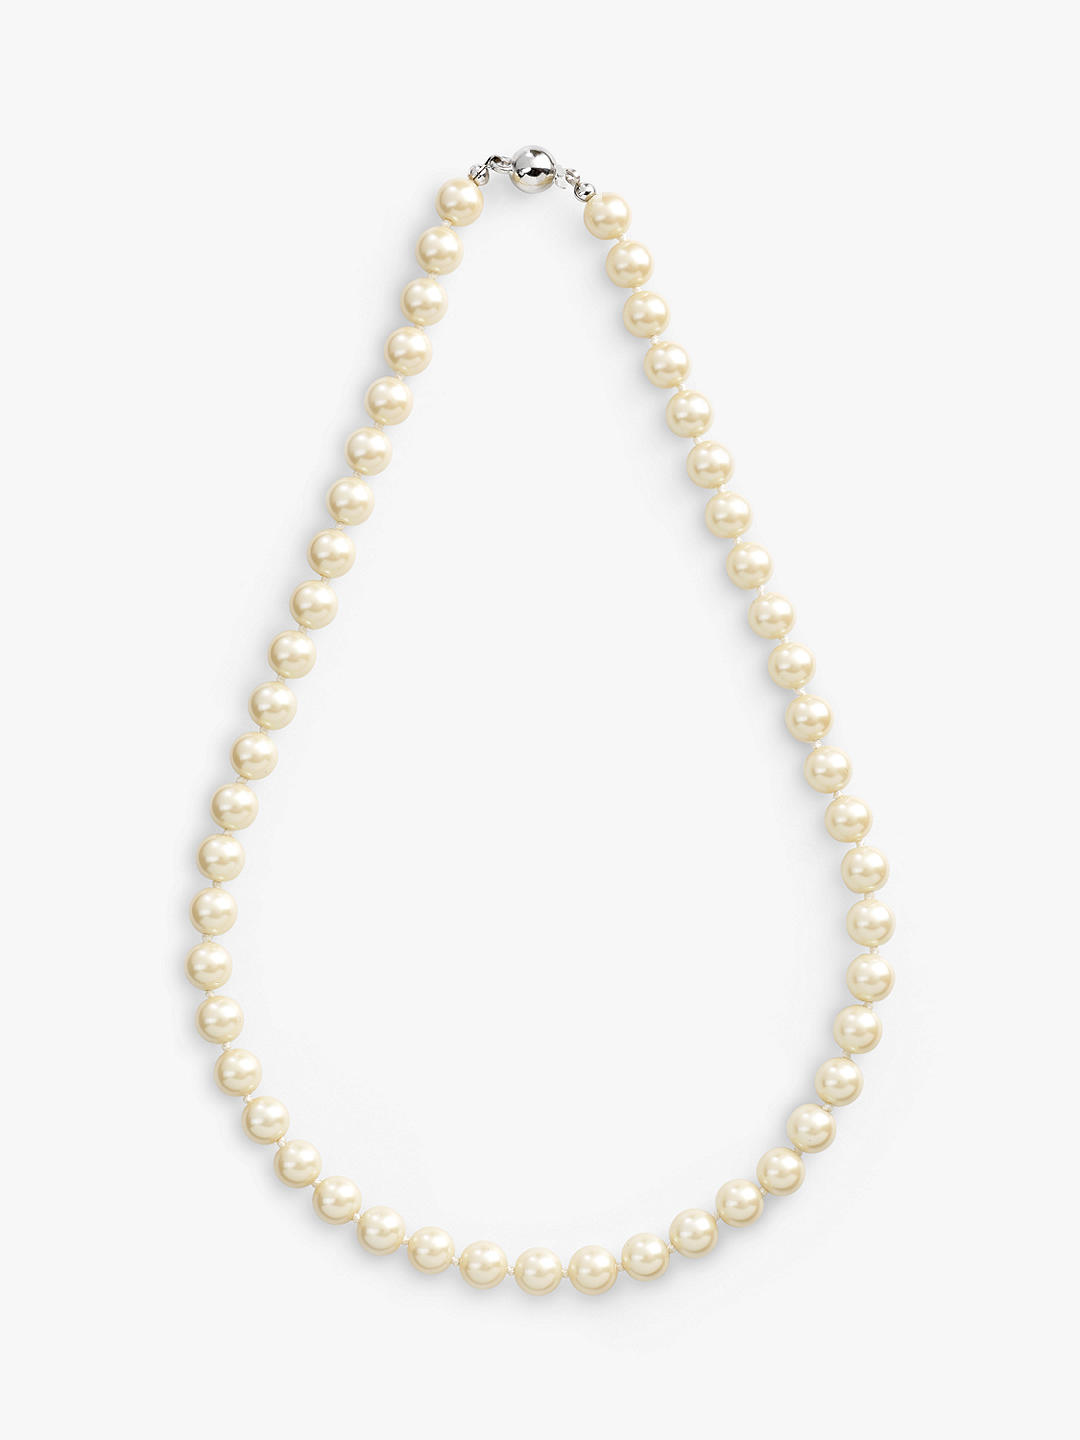 Eclectica Vintage Single Row Faux Pearl Necklace, Cream/Silver